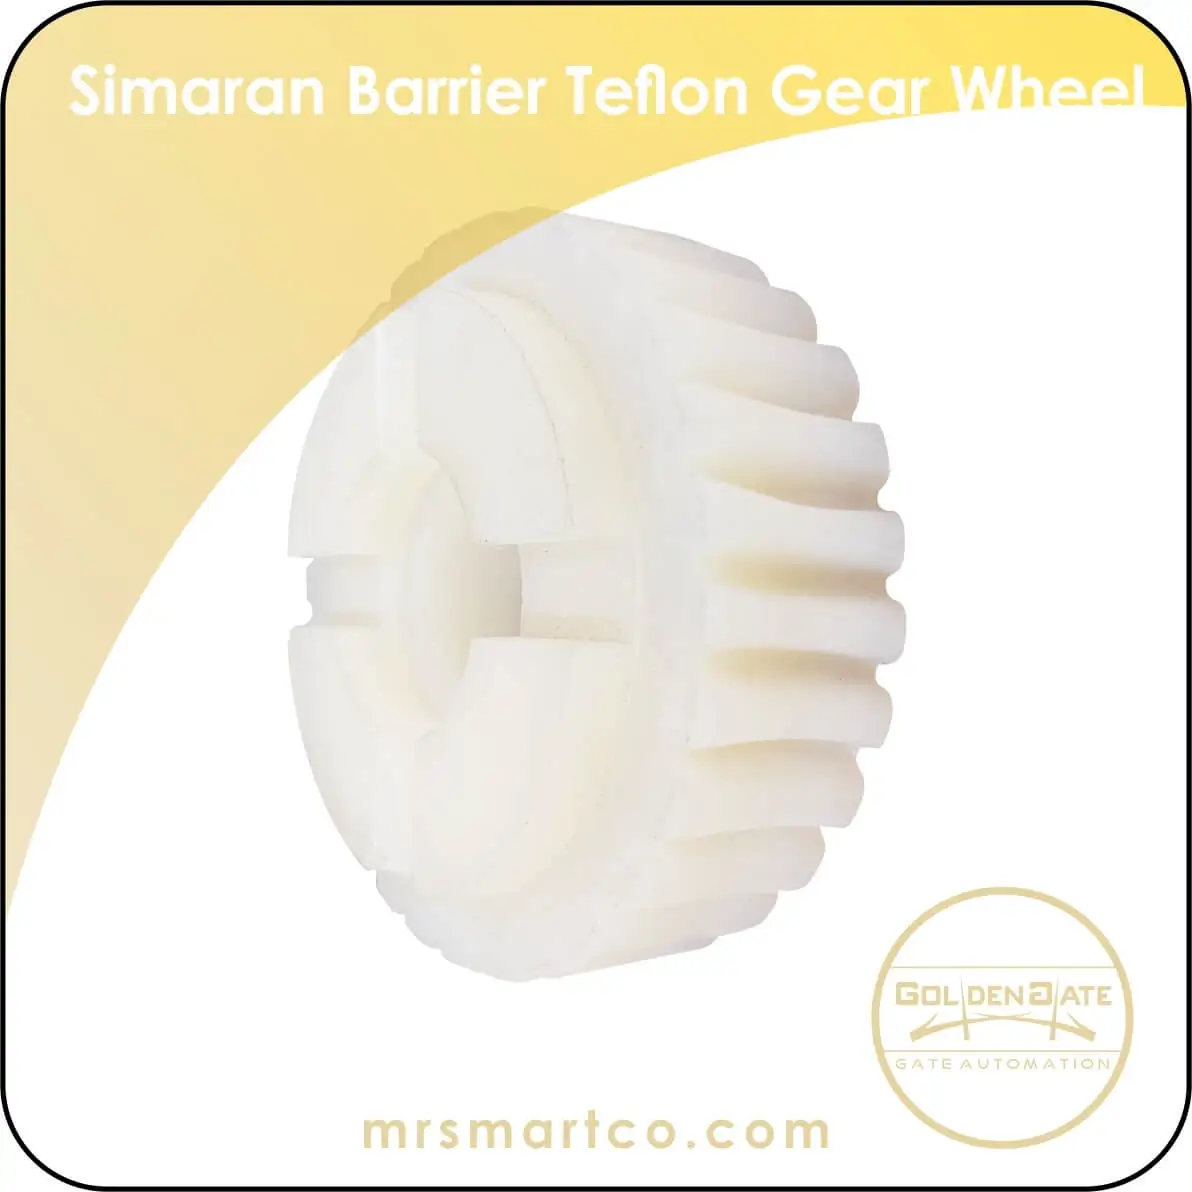 Simaran Barrier Teflon Gear Wheel